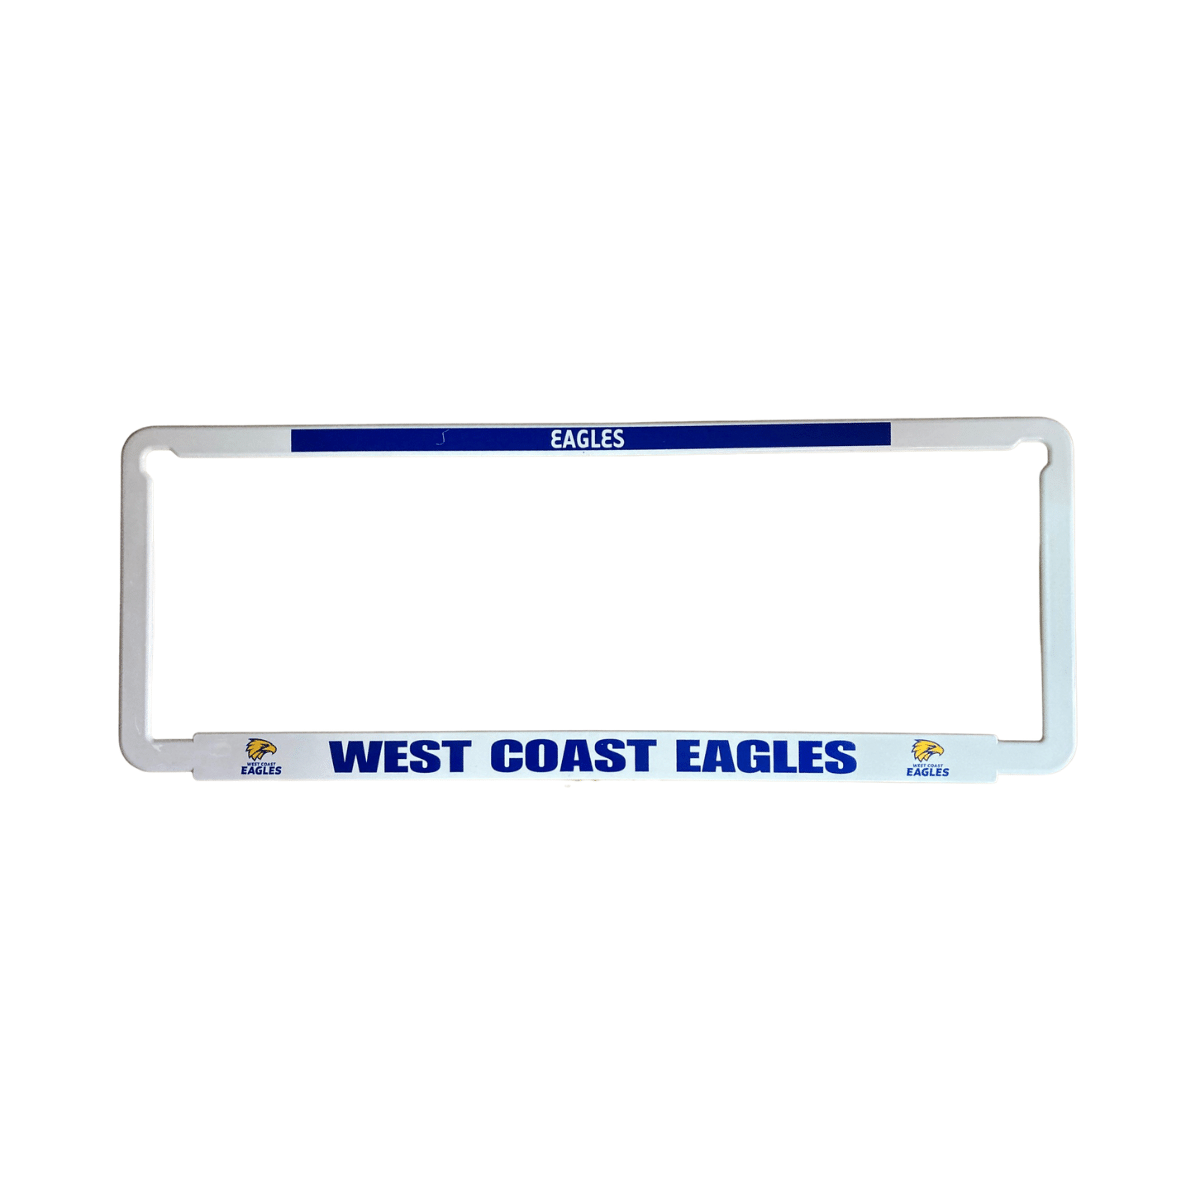 West Coast Eagles AFL Number Plate Cover